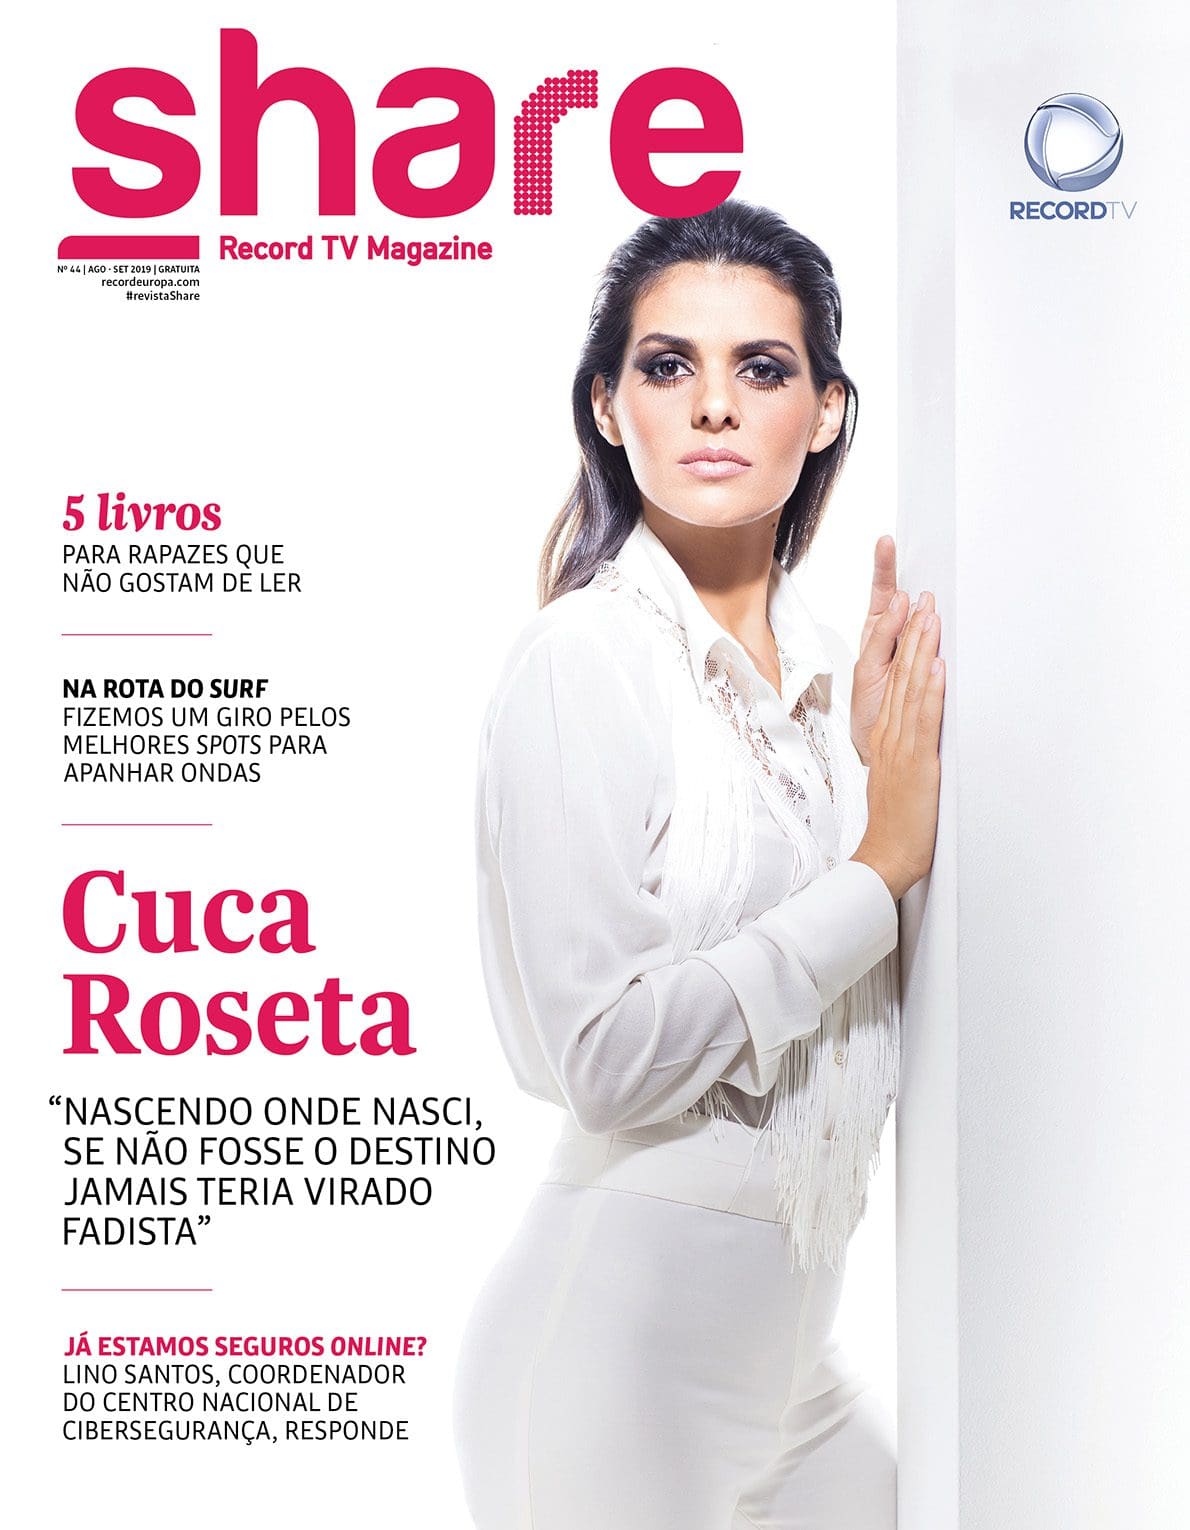 Share Magazine 44 - Cuca Roseta